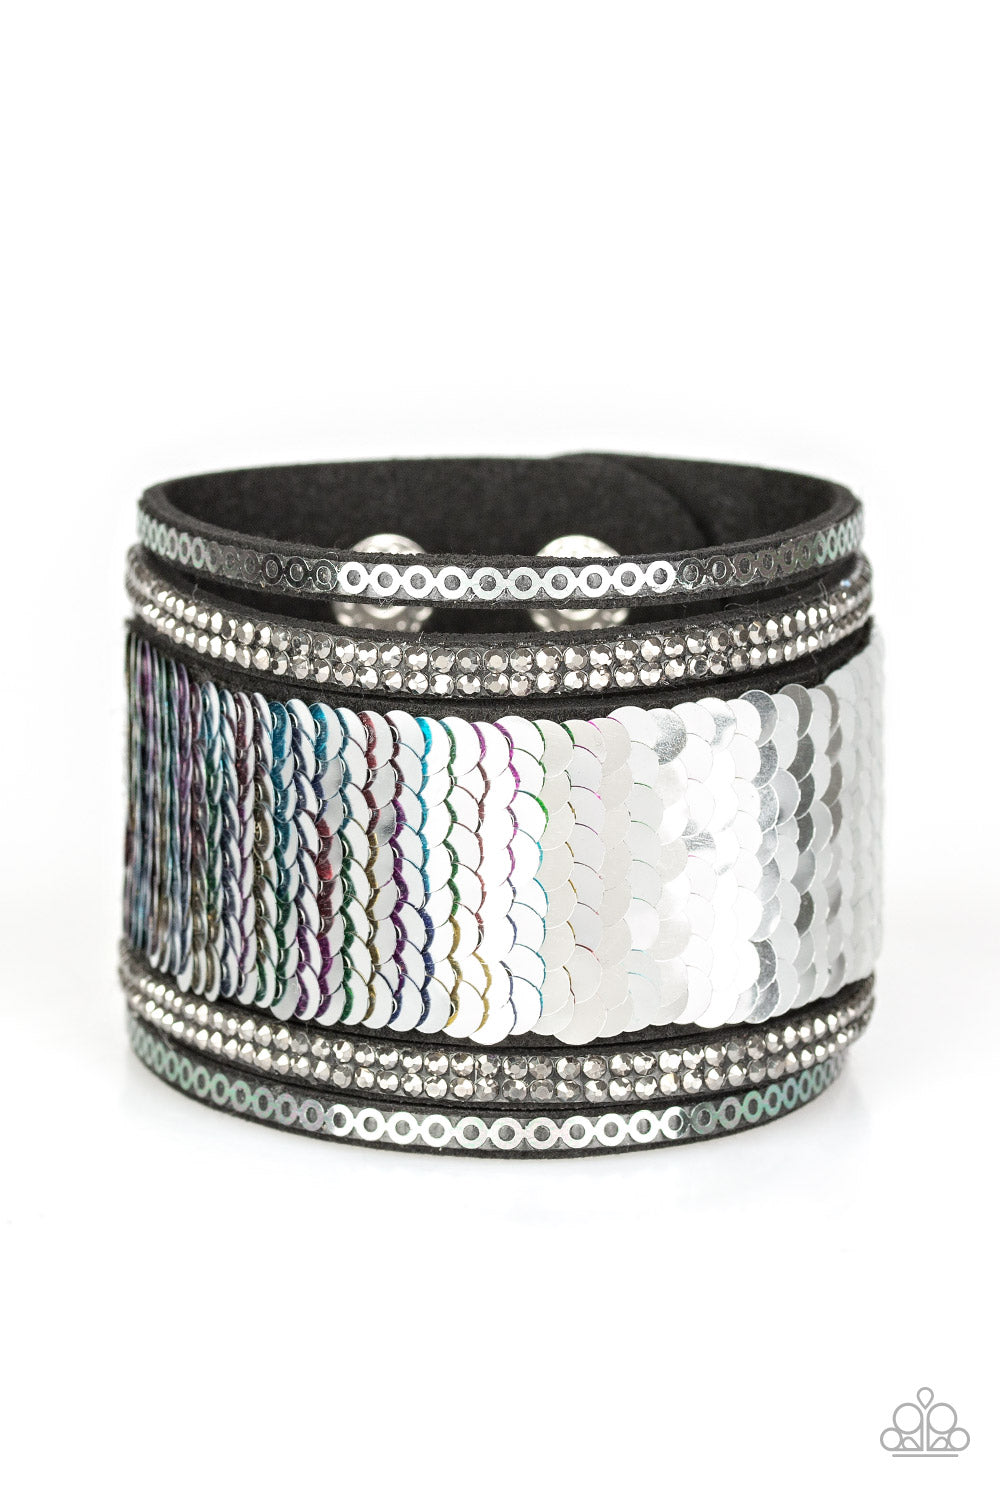 Heads Or MERMAID Tails - Multi wrap bracelet